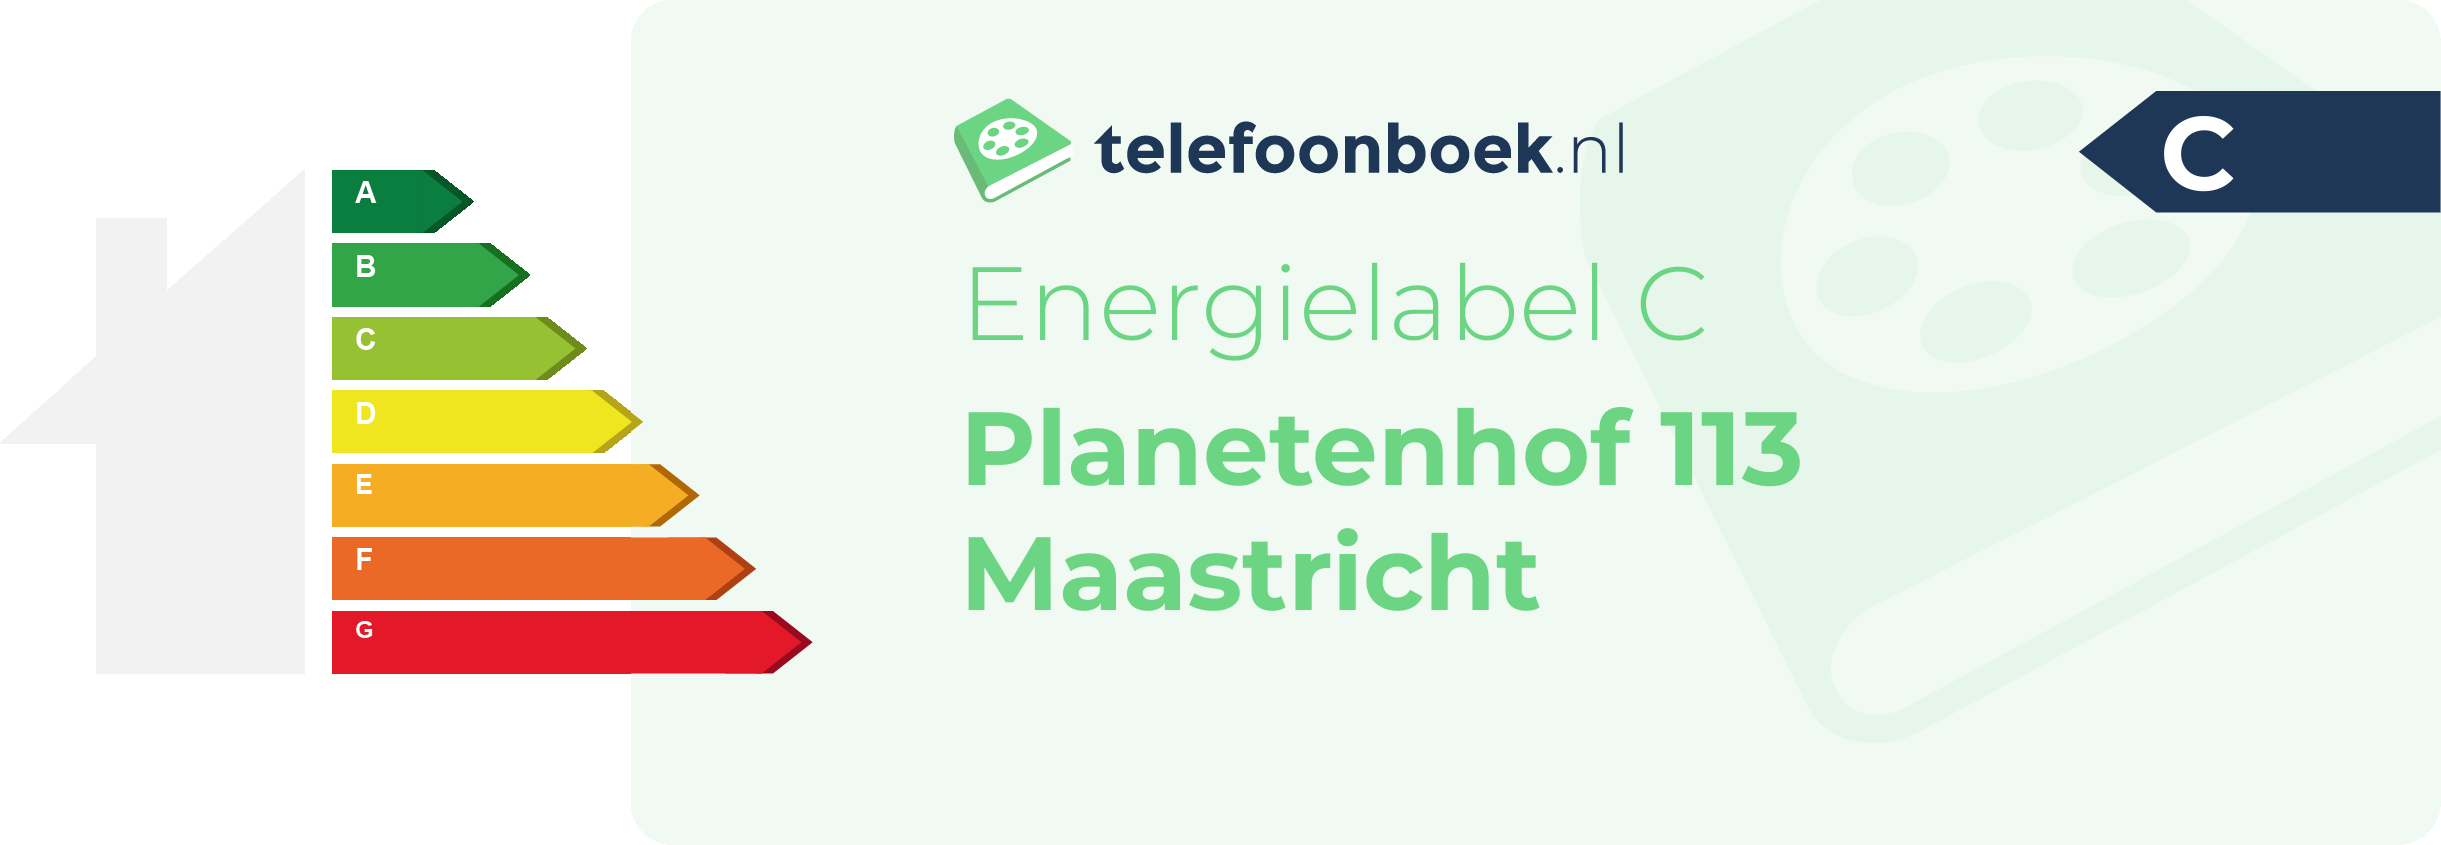 Energielabel Planetenhof 113 Maastricht